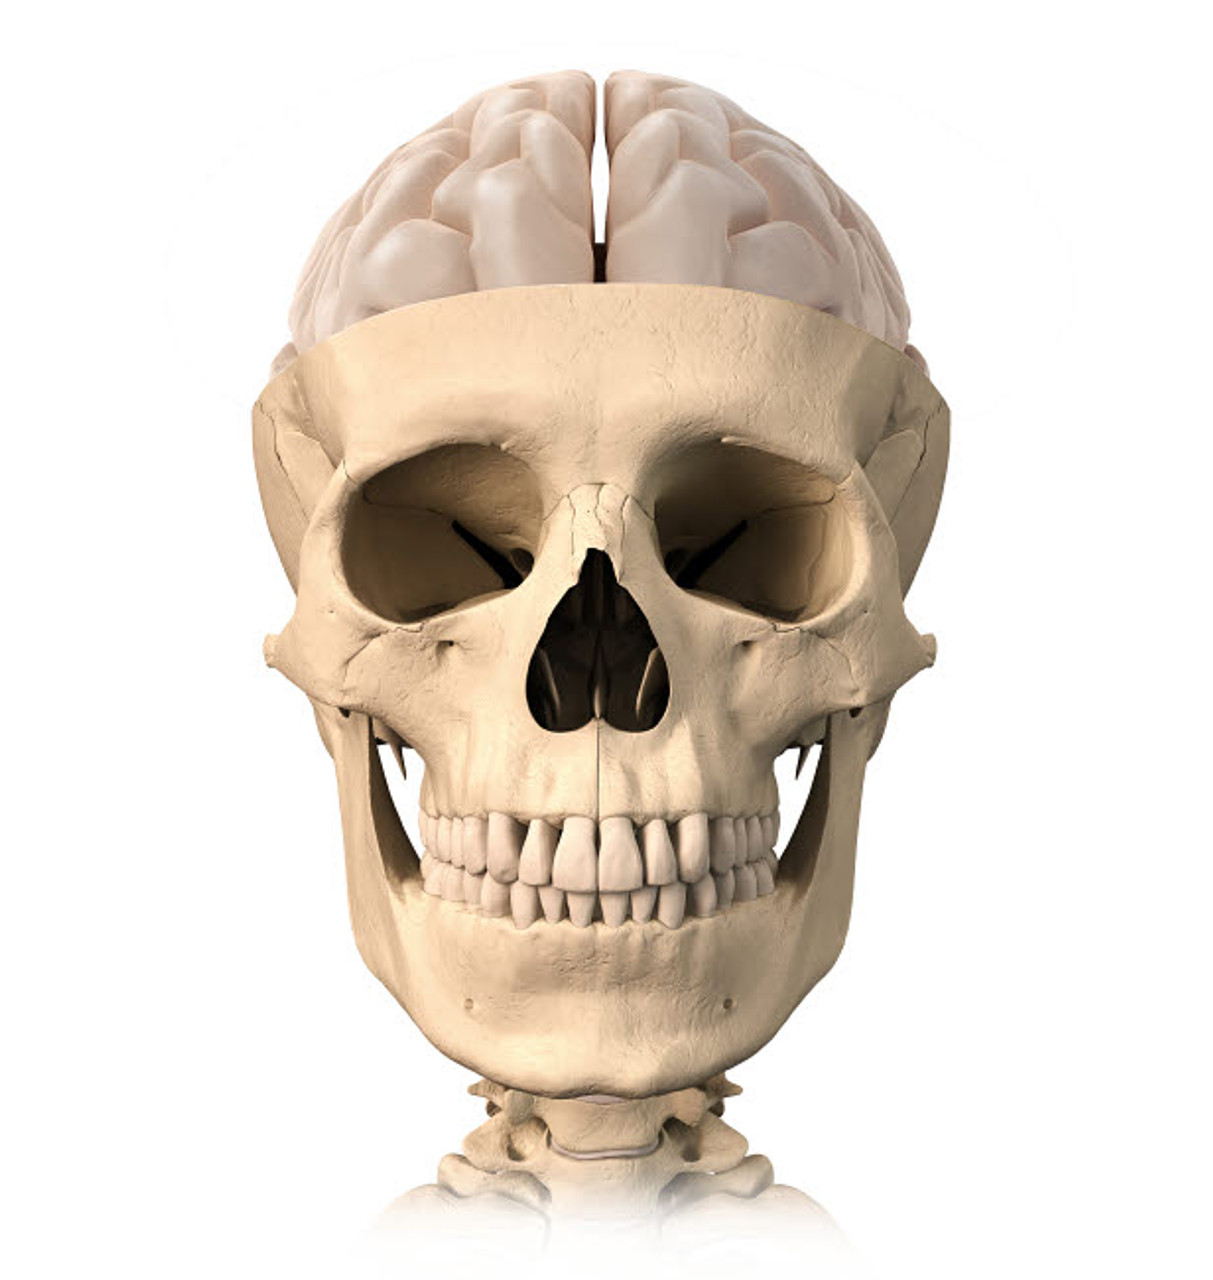 Brain and skull anatomy, illustration - Stock Image - C038/4321